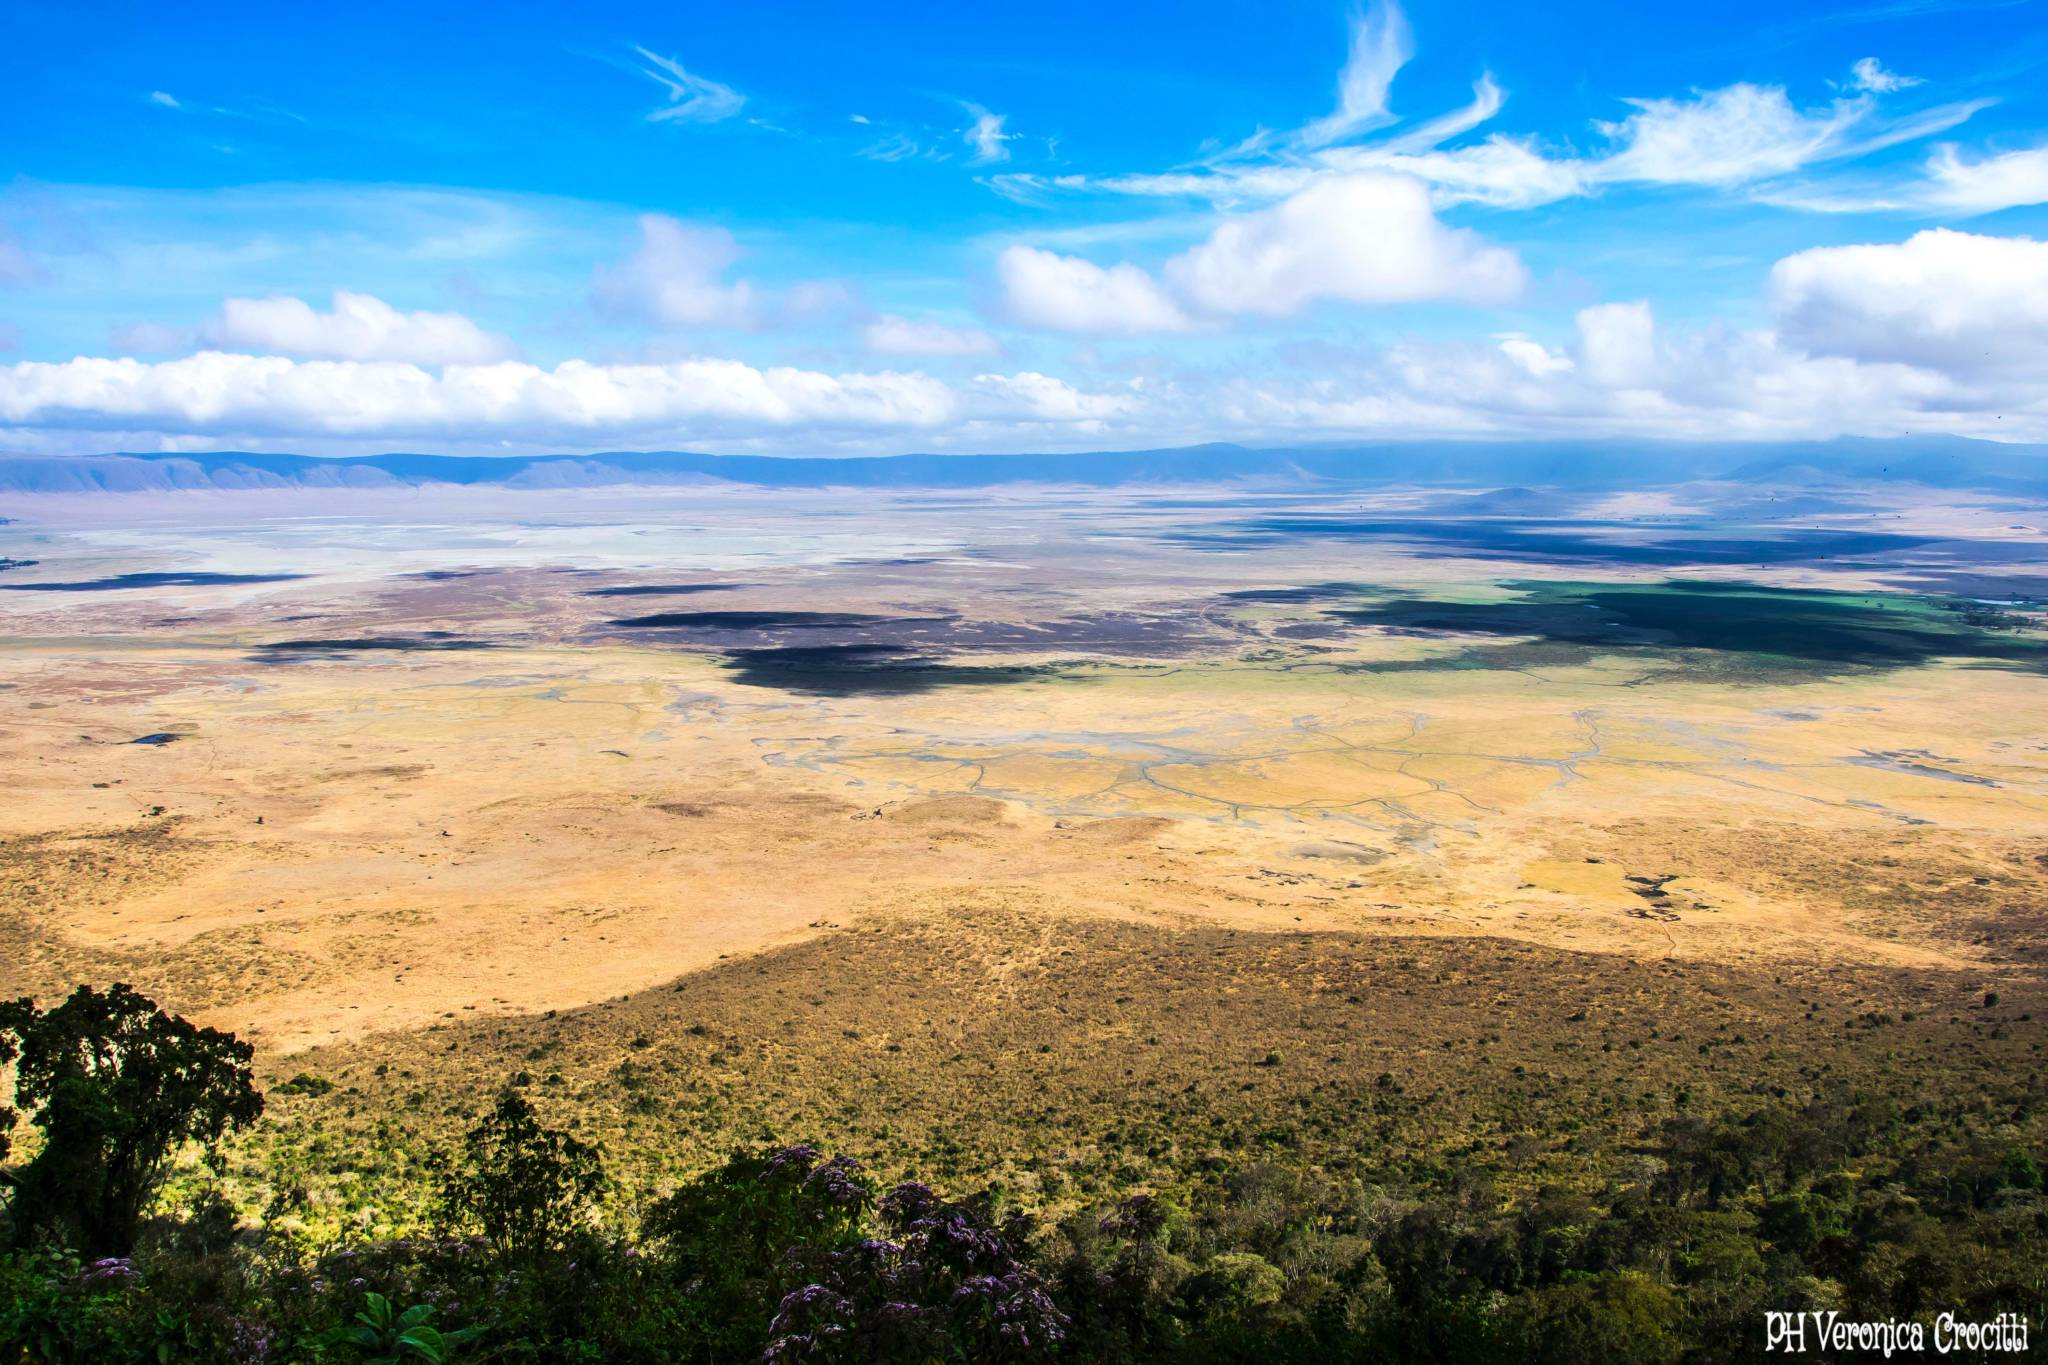 Ngorongoro Crater - Tanzania, Africa